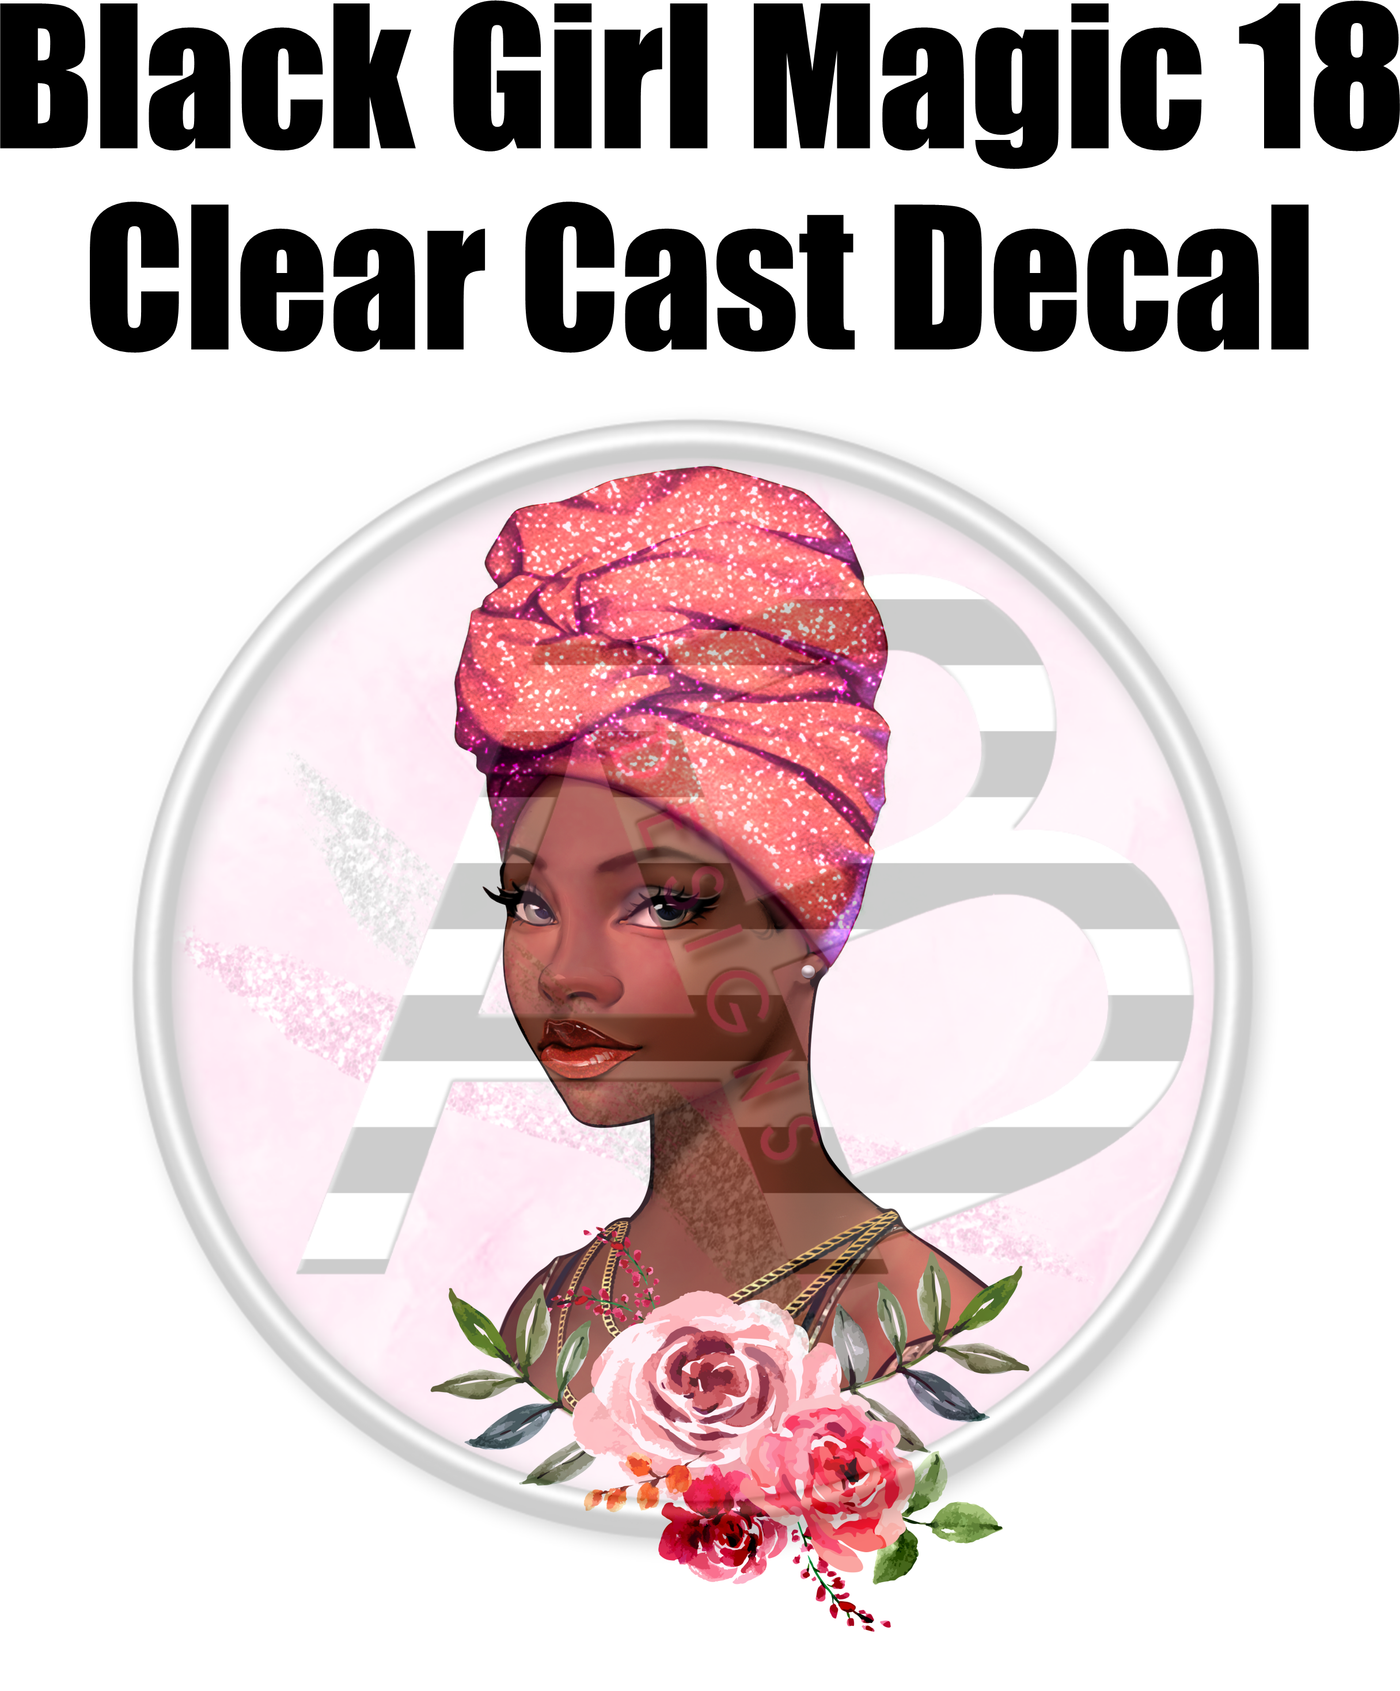 Black Girl Magic 18 - Clear Cast Decal